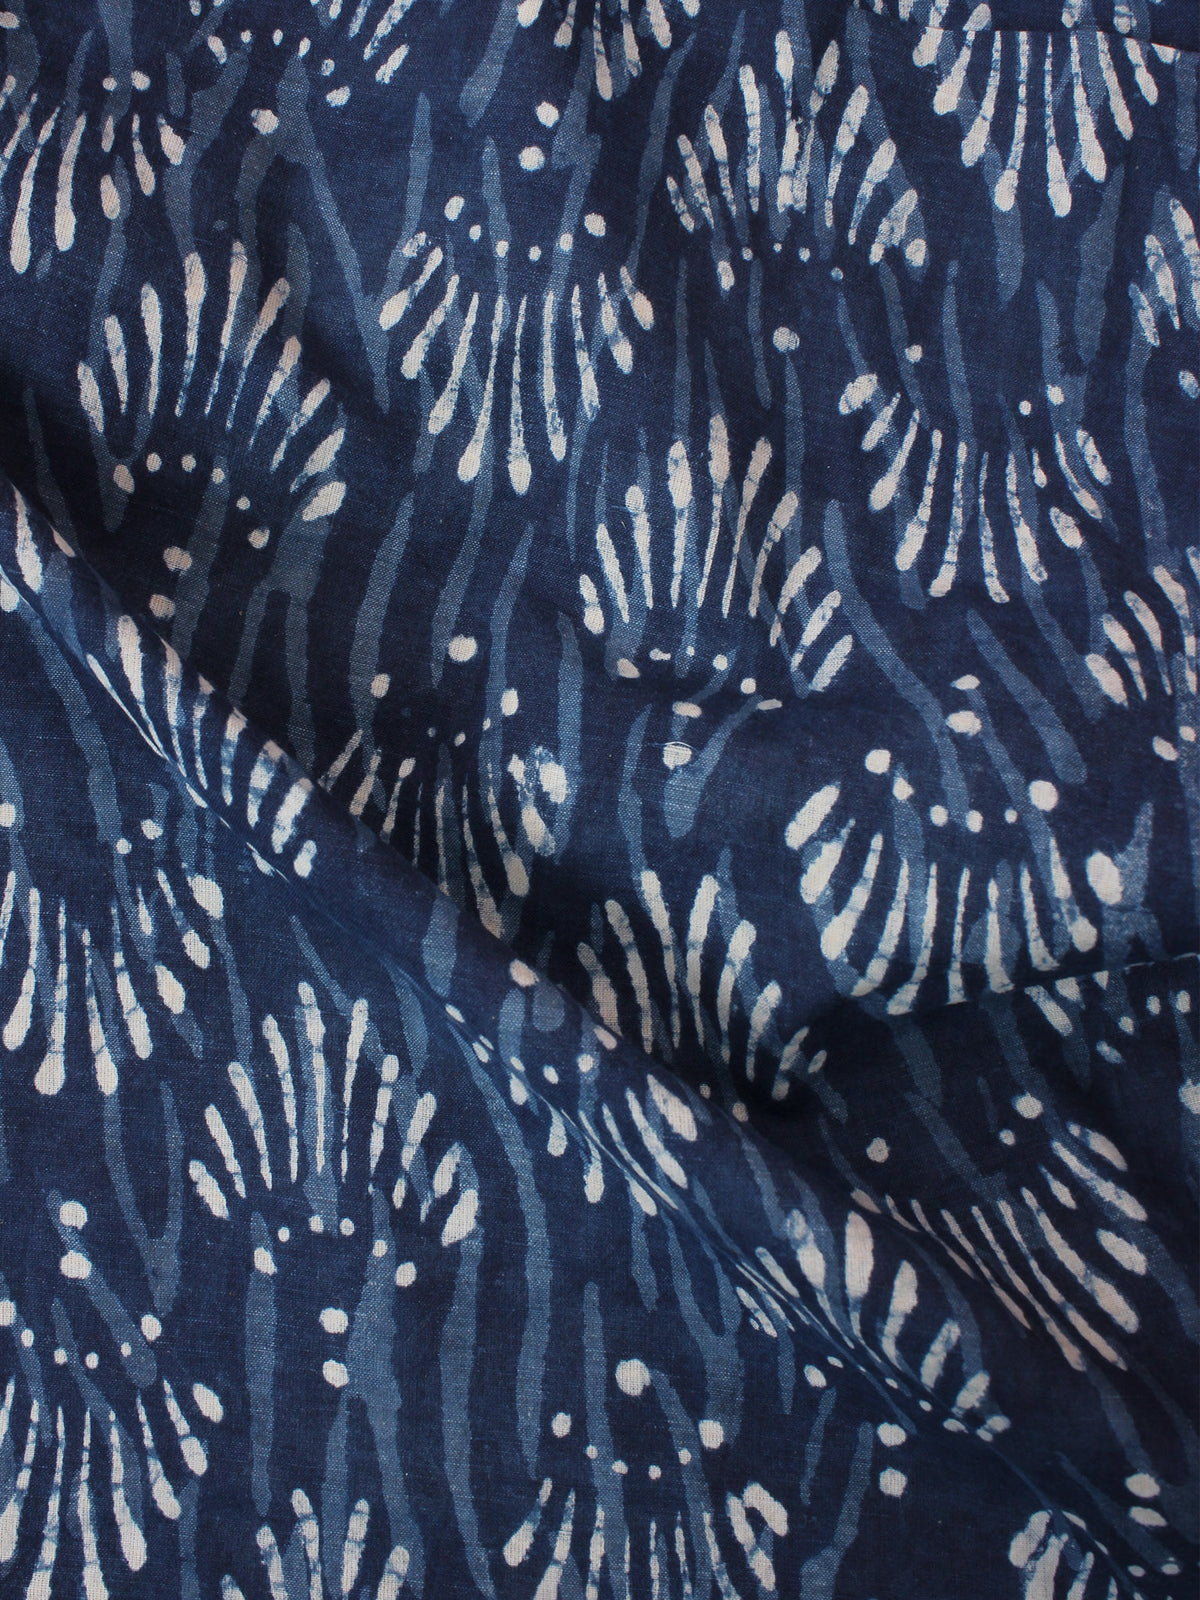 Indigo Blue White Hand Block Printed Cotton Fabric Per Meter - F0916358